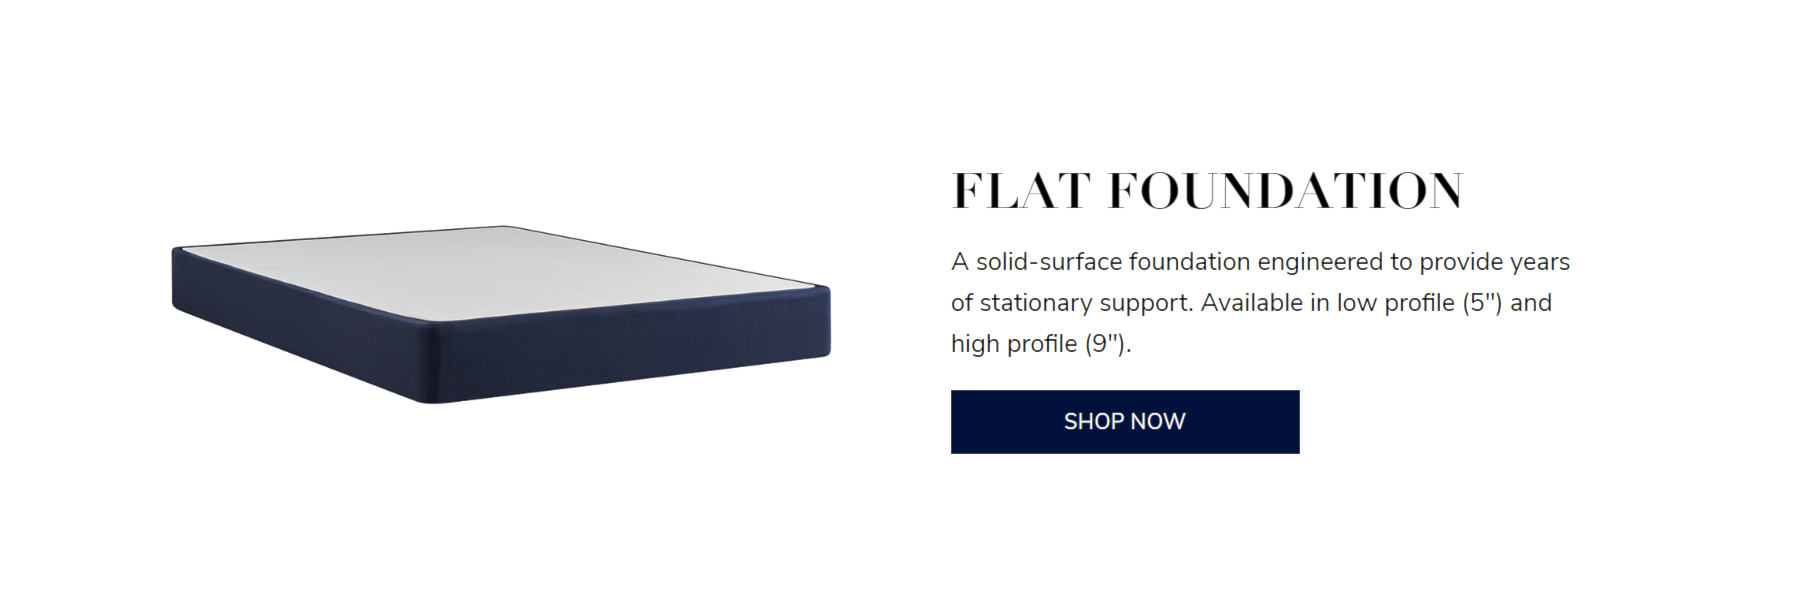 flat foundation
